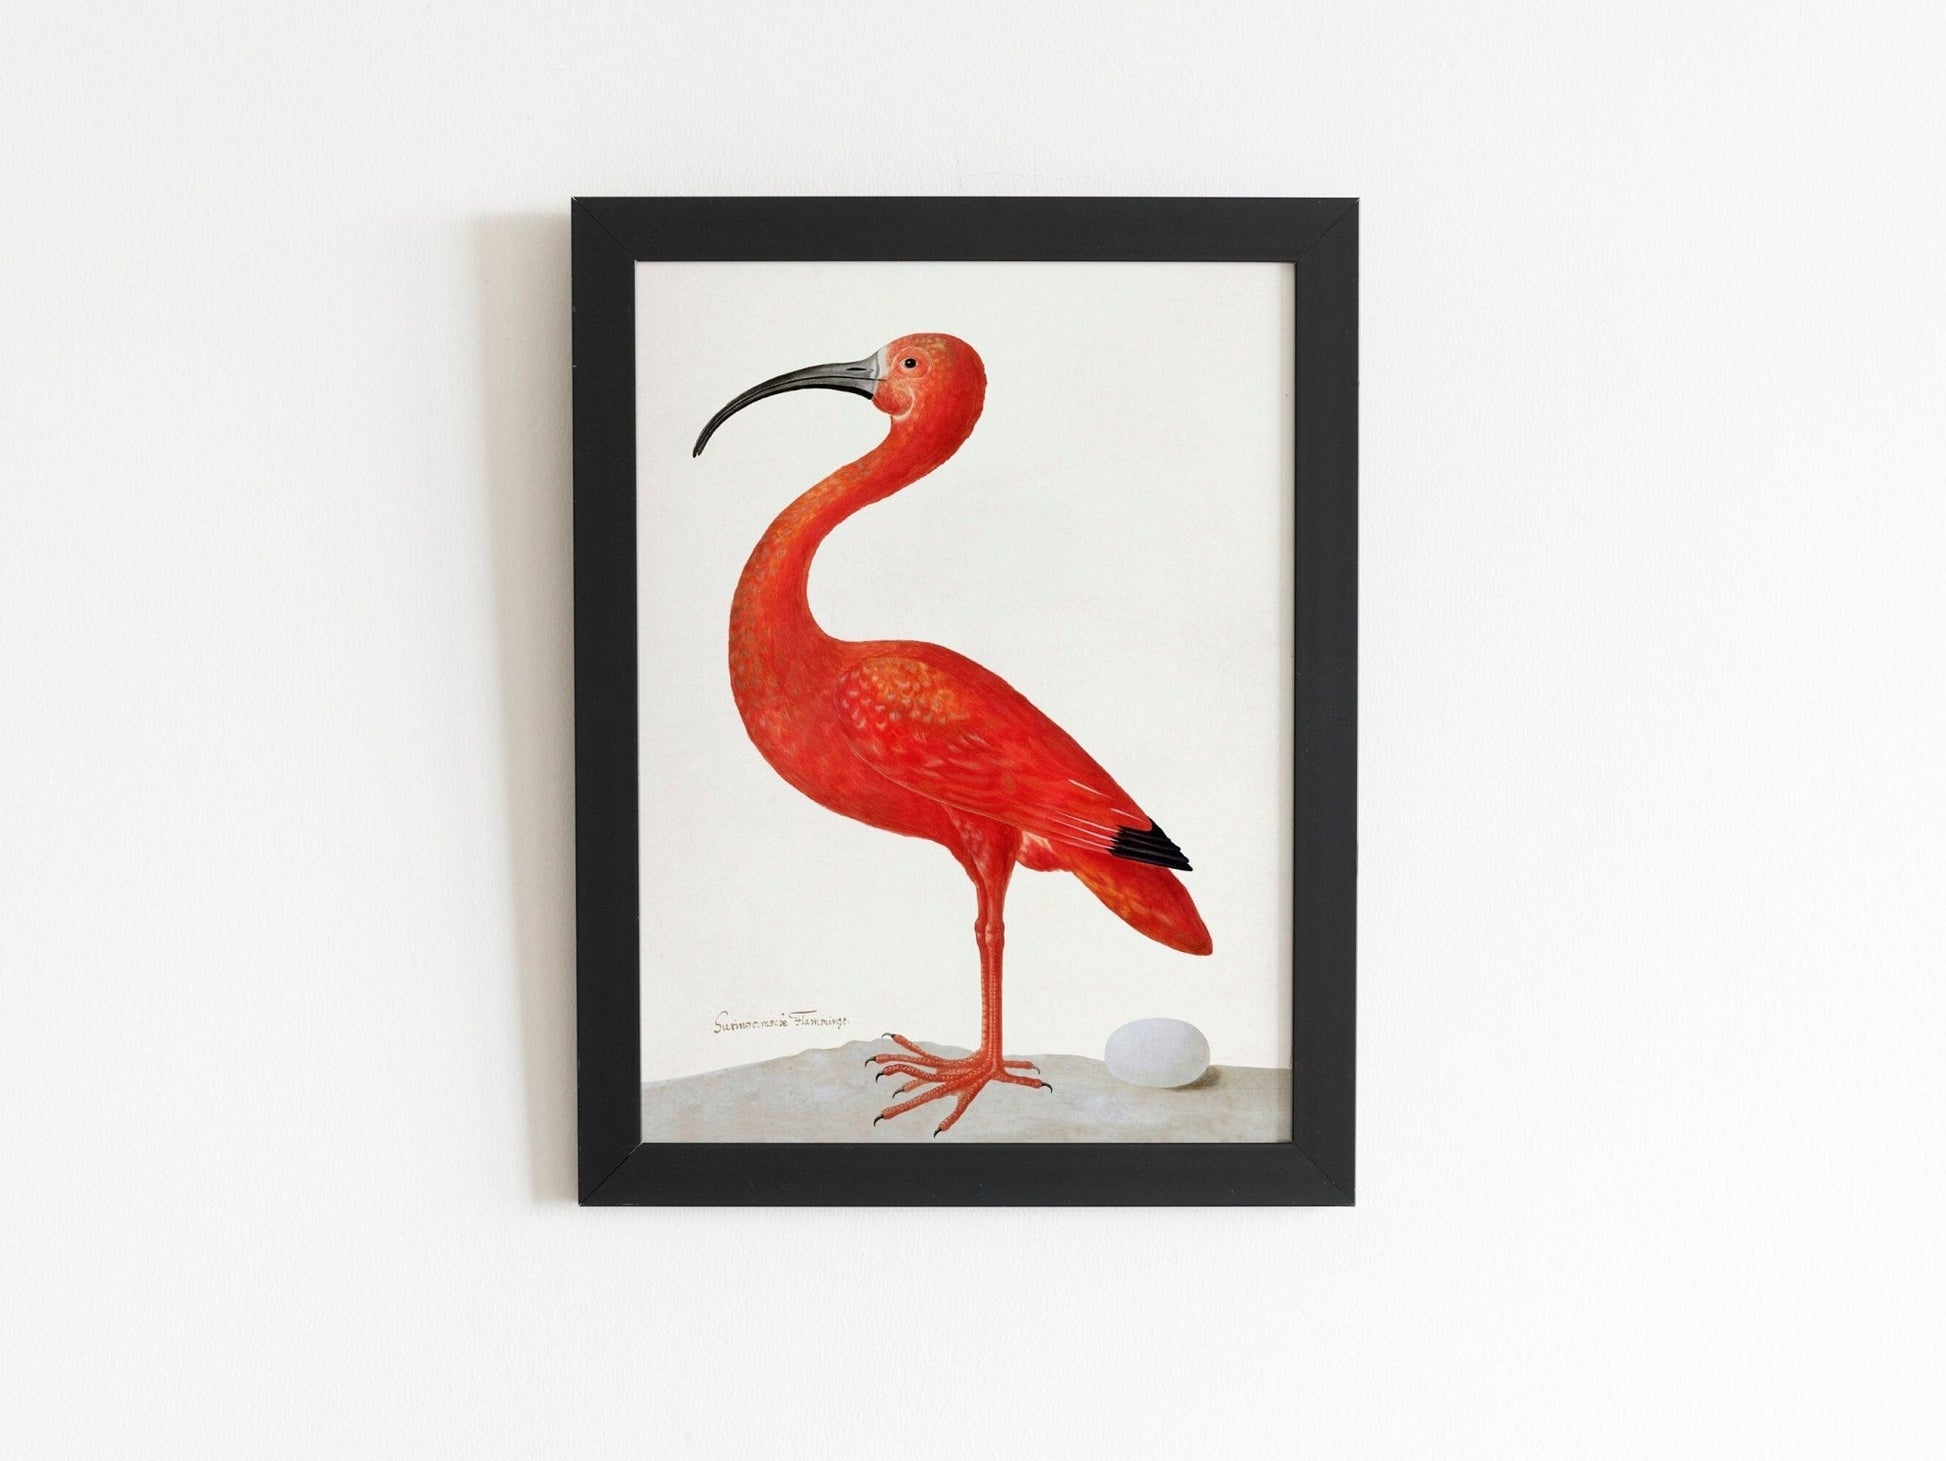 MARIA SIBYLLA MERIAN - Scarlet Ibis With An Egg - Pathos Studio - Posters, Prints, & Visual Artwork